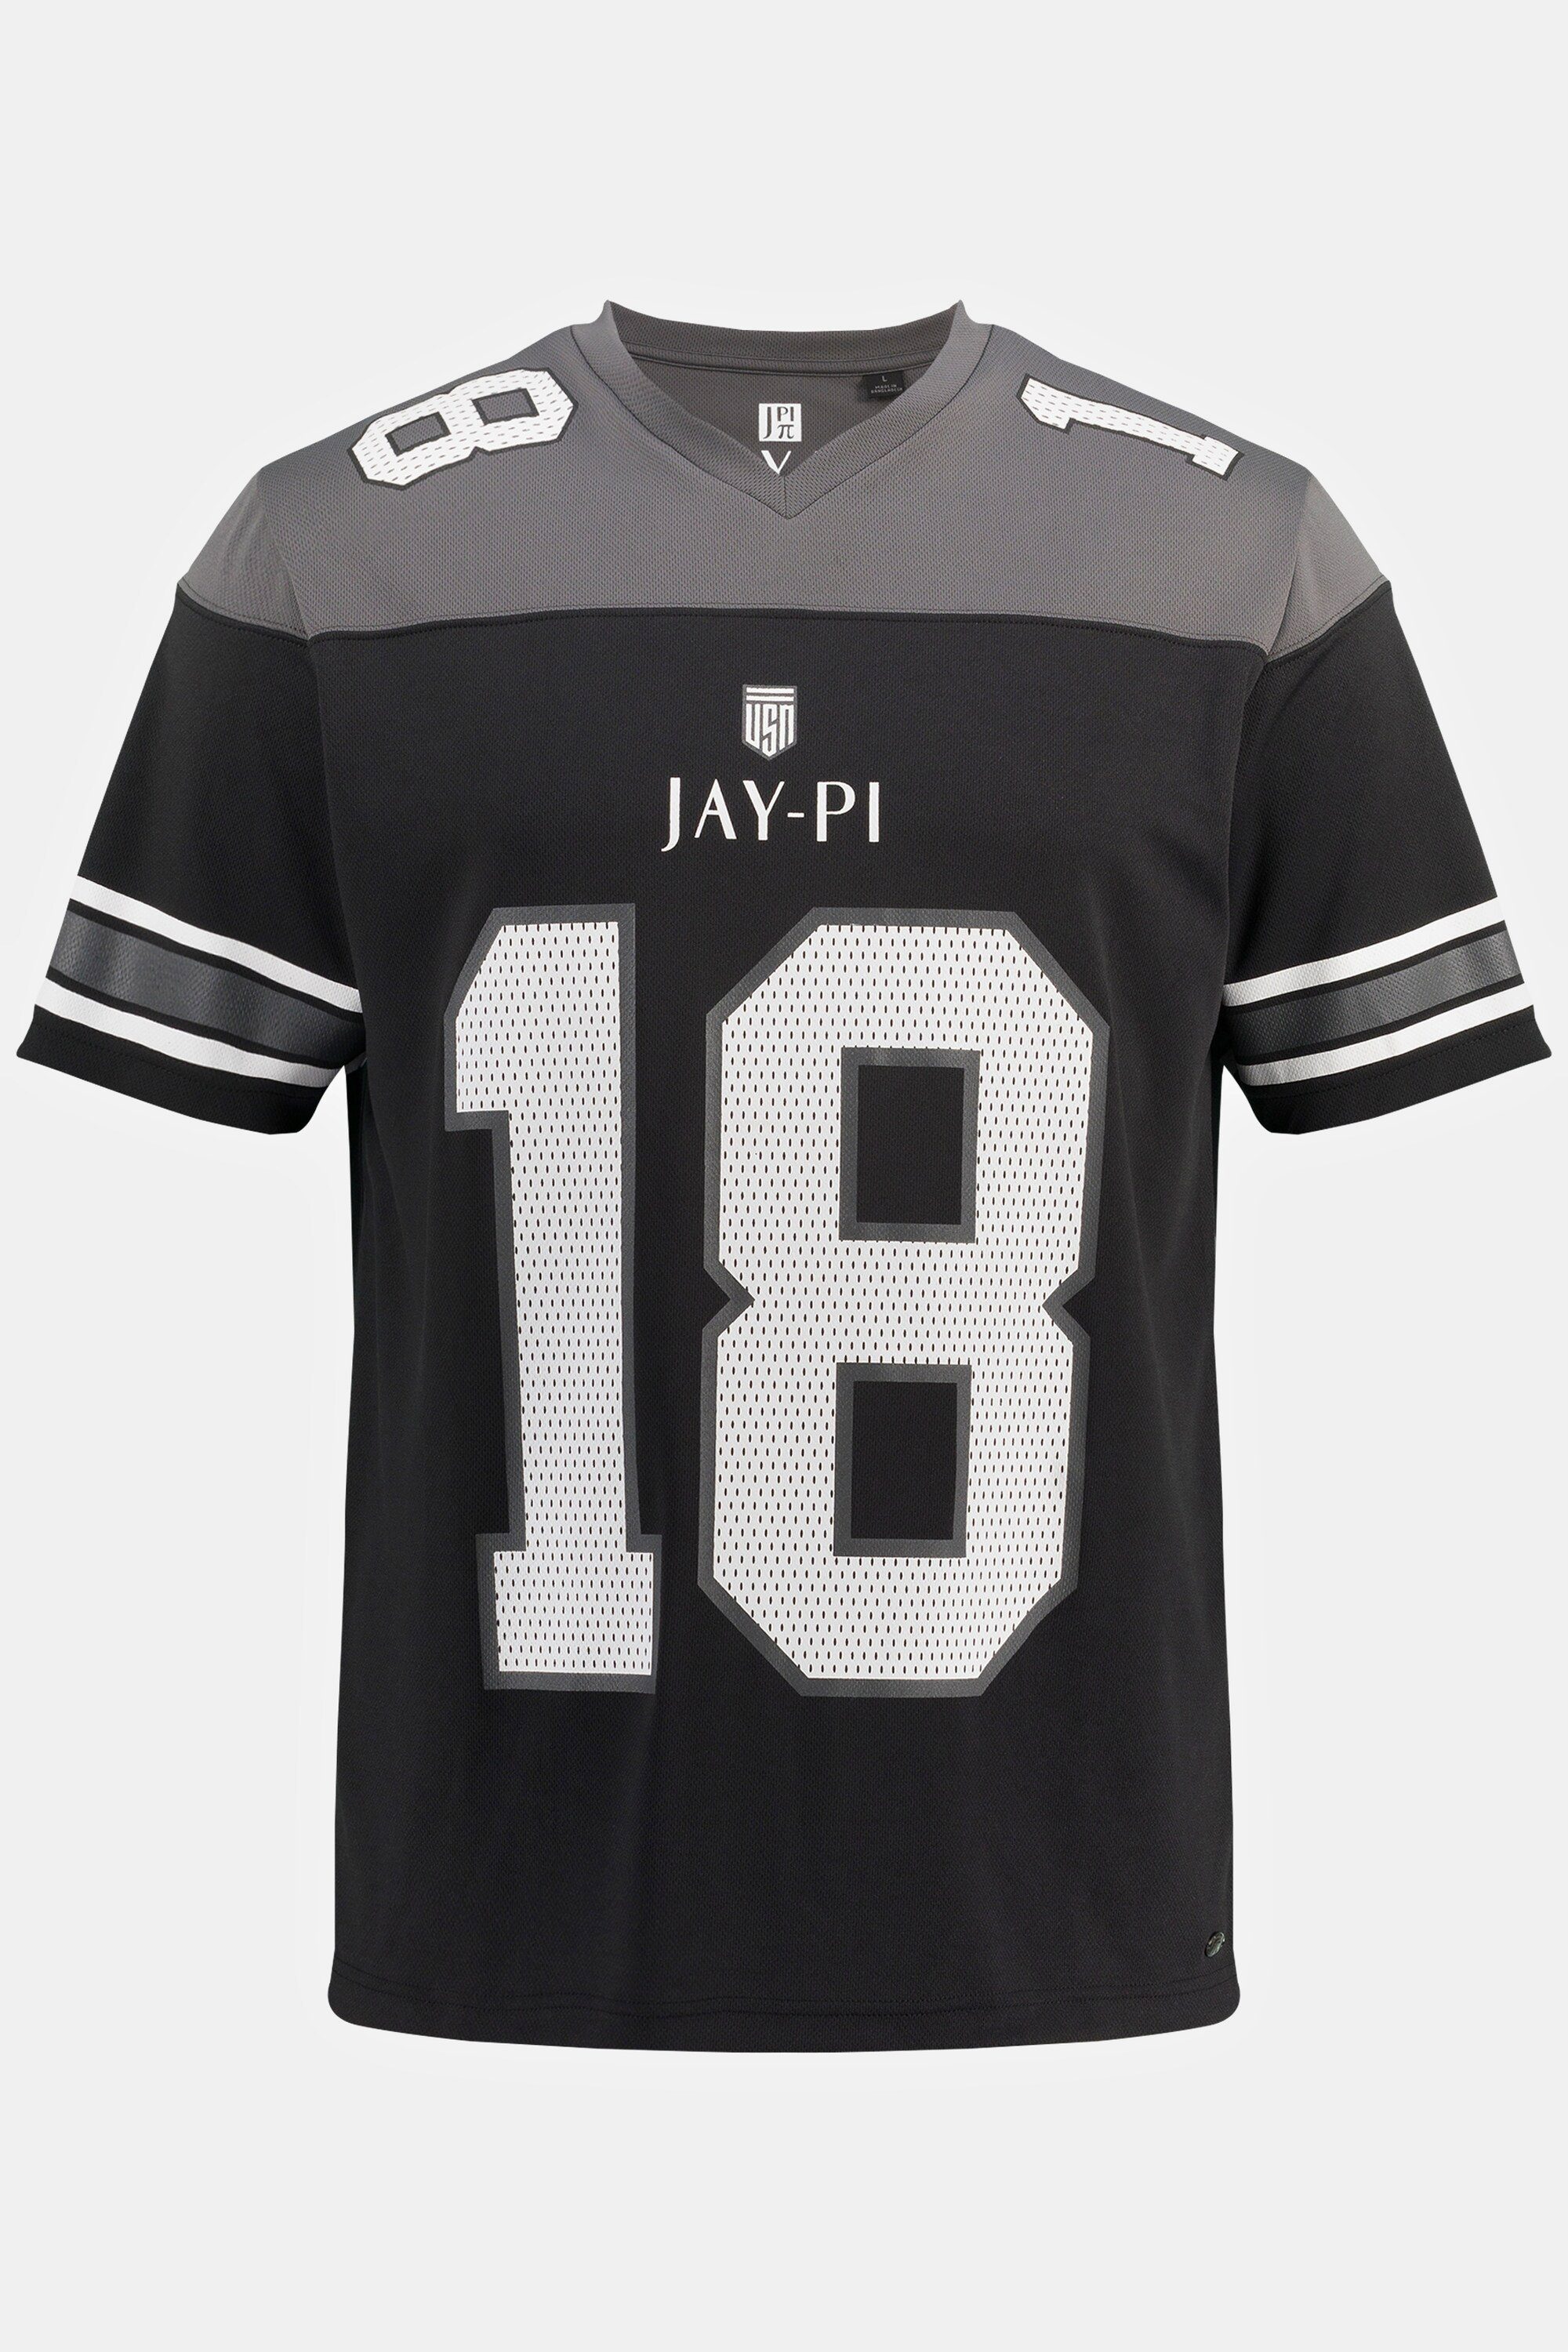 JP1880 American T-Shirt Football-Trikot Football Halbarm